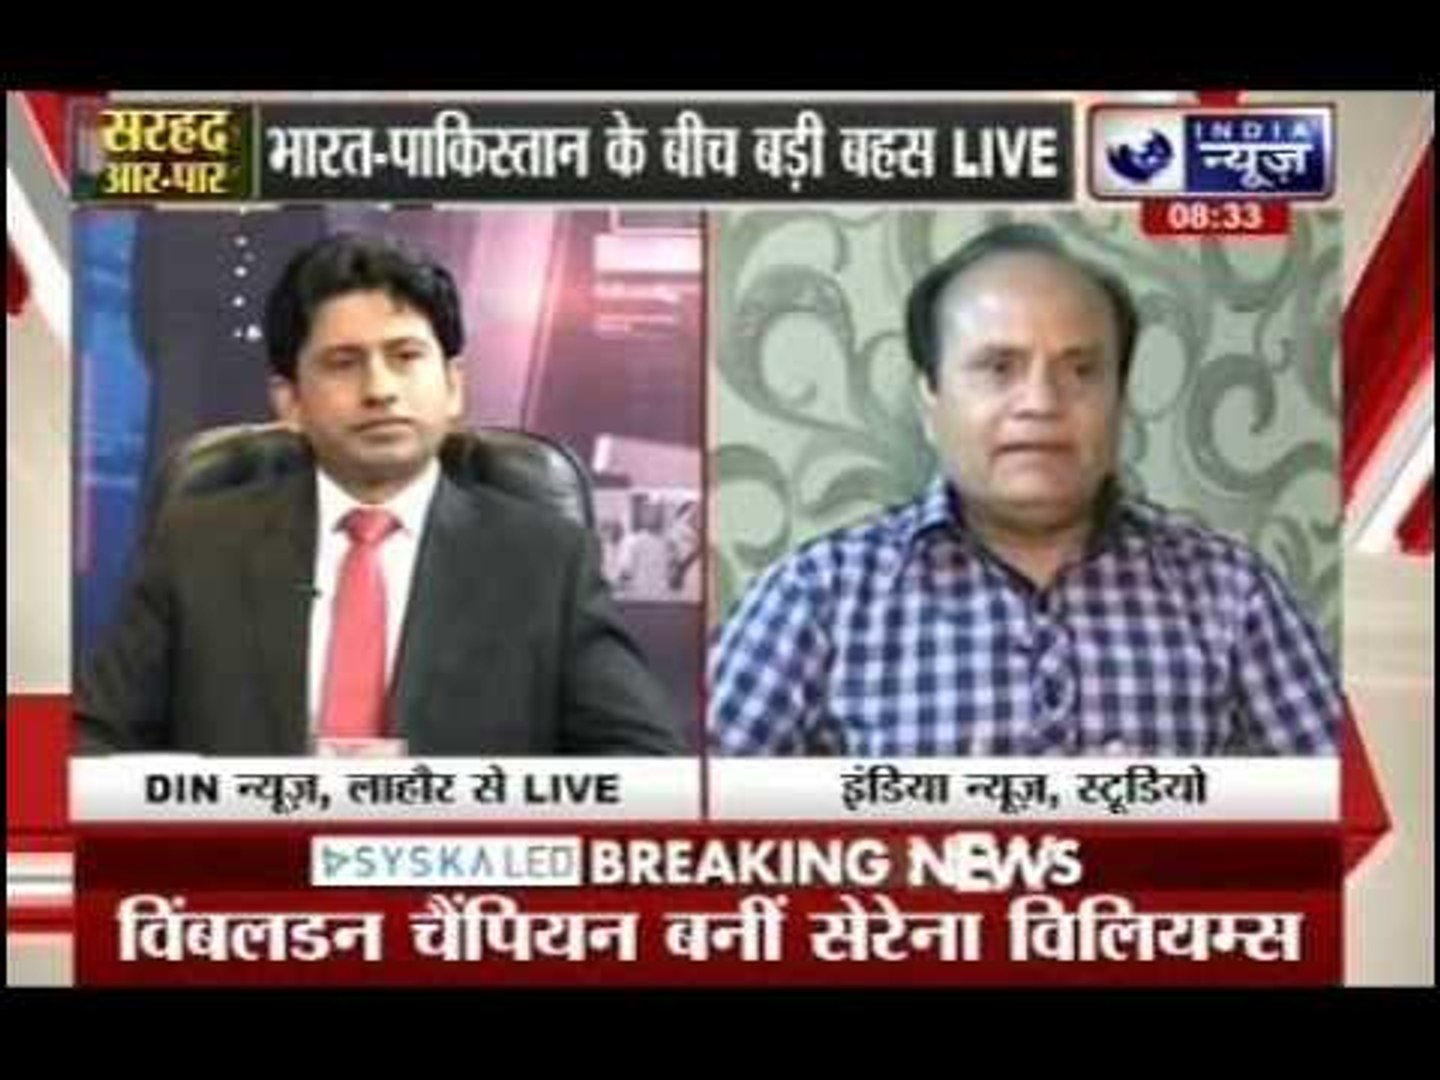 Sarhad Aar Paar: India News exclusive live debate with Pakistan